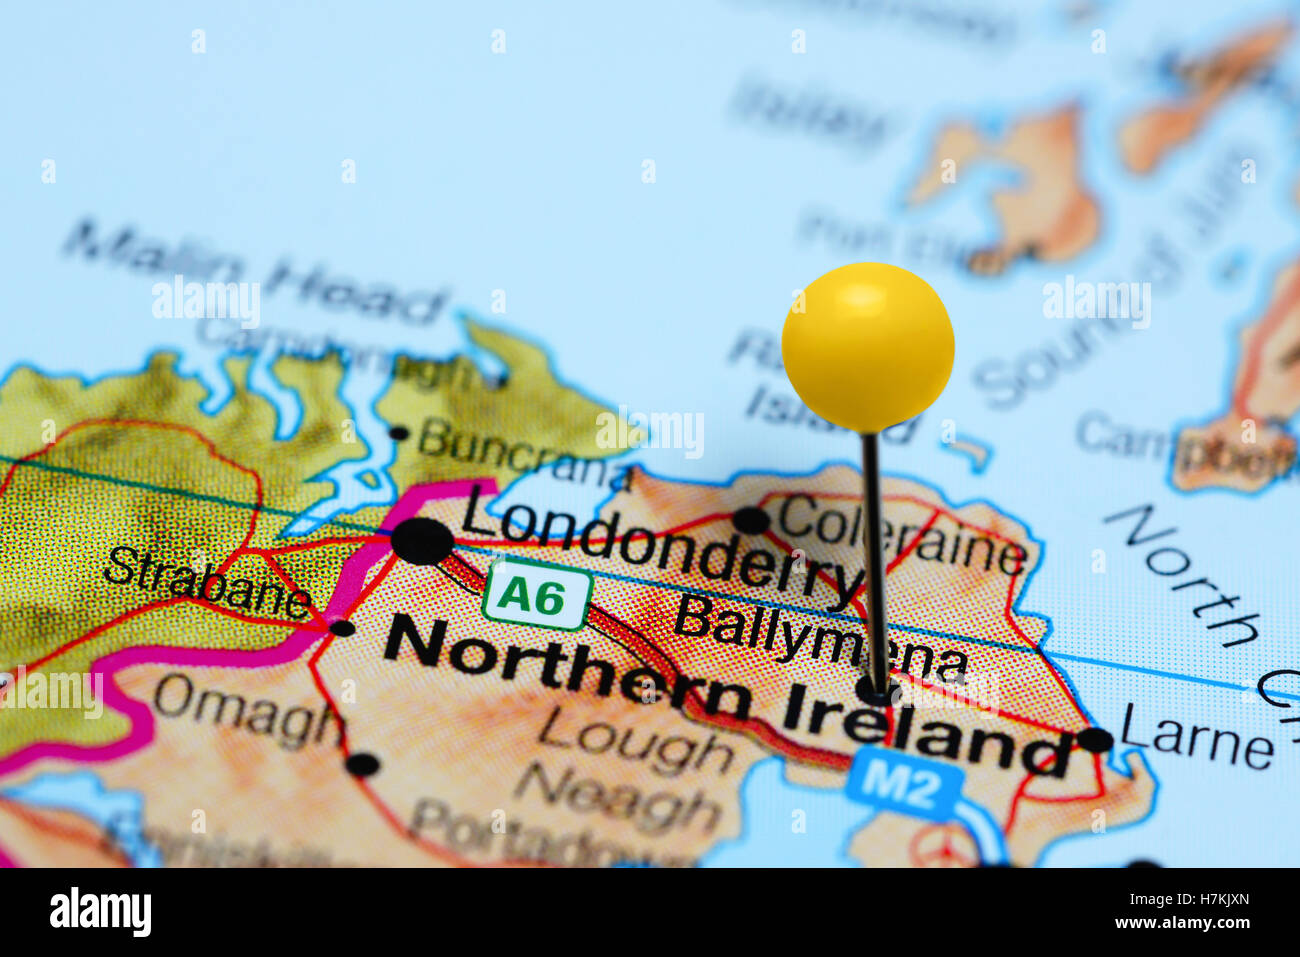 Ballymena Epinglee Sur Une Carte De L Irlande Du Nord H7kjxn 